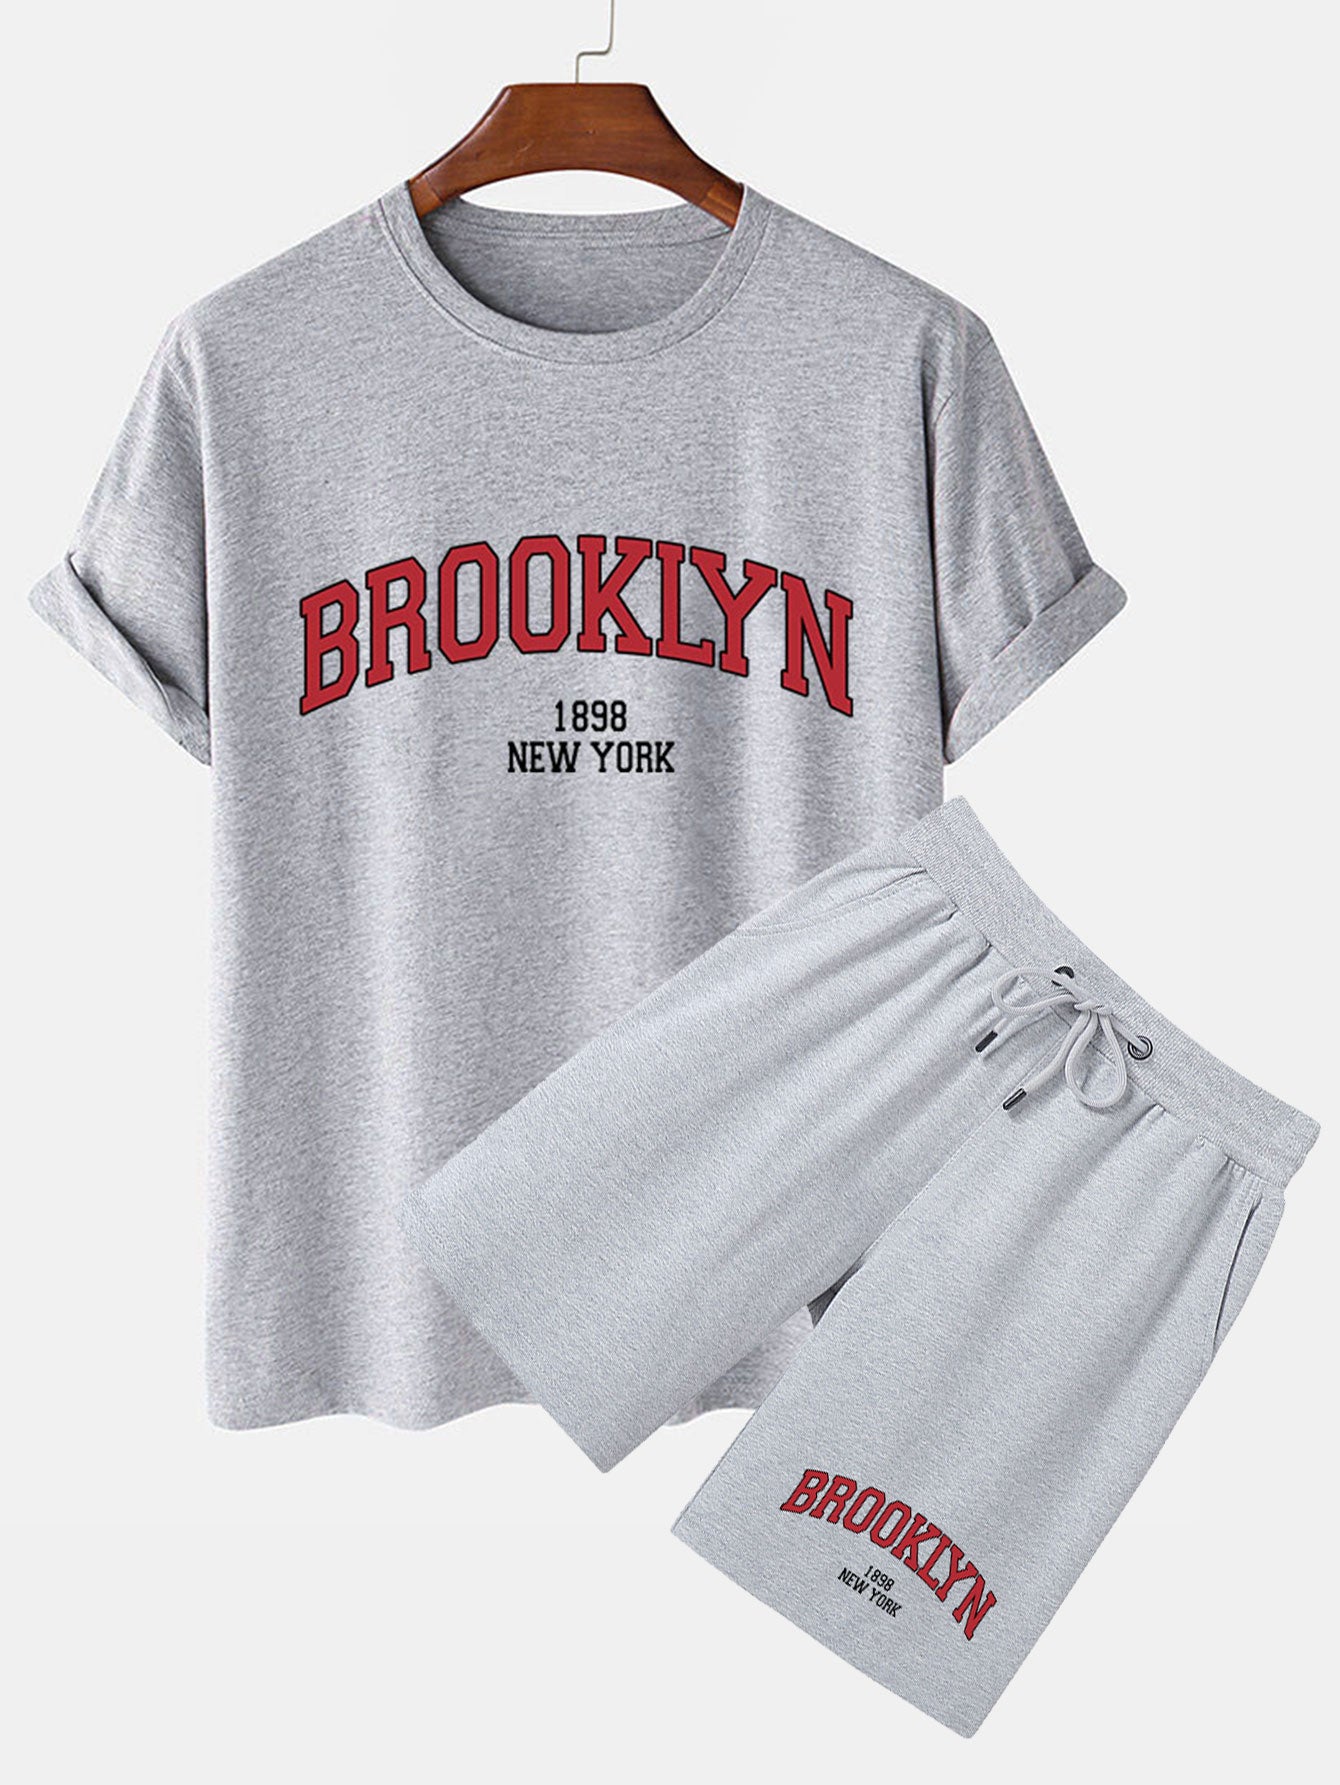 Brooklyn Print T-Shirt & Shorts